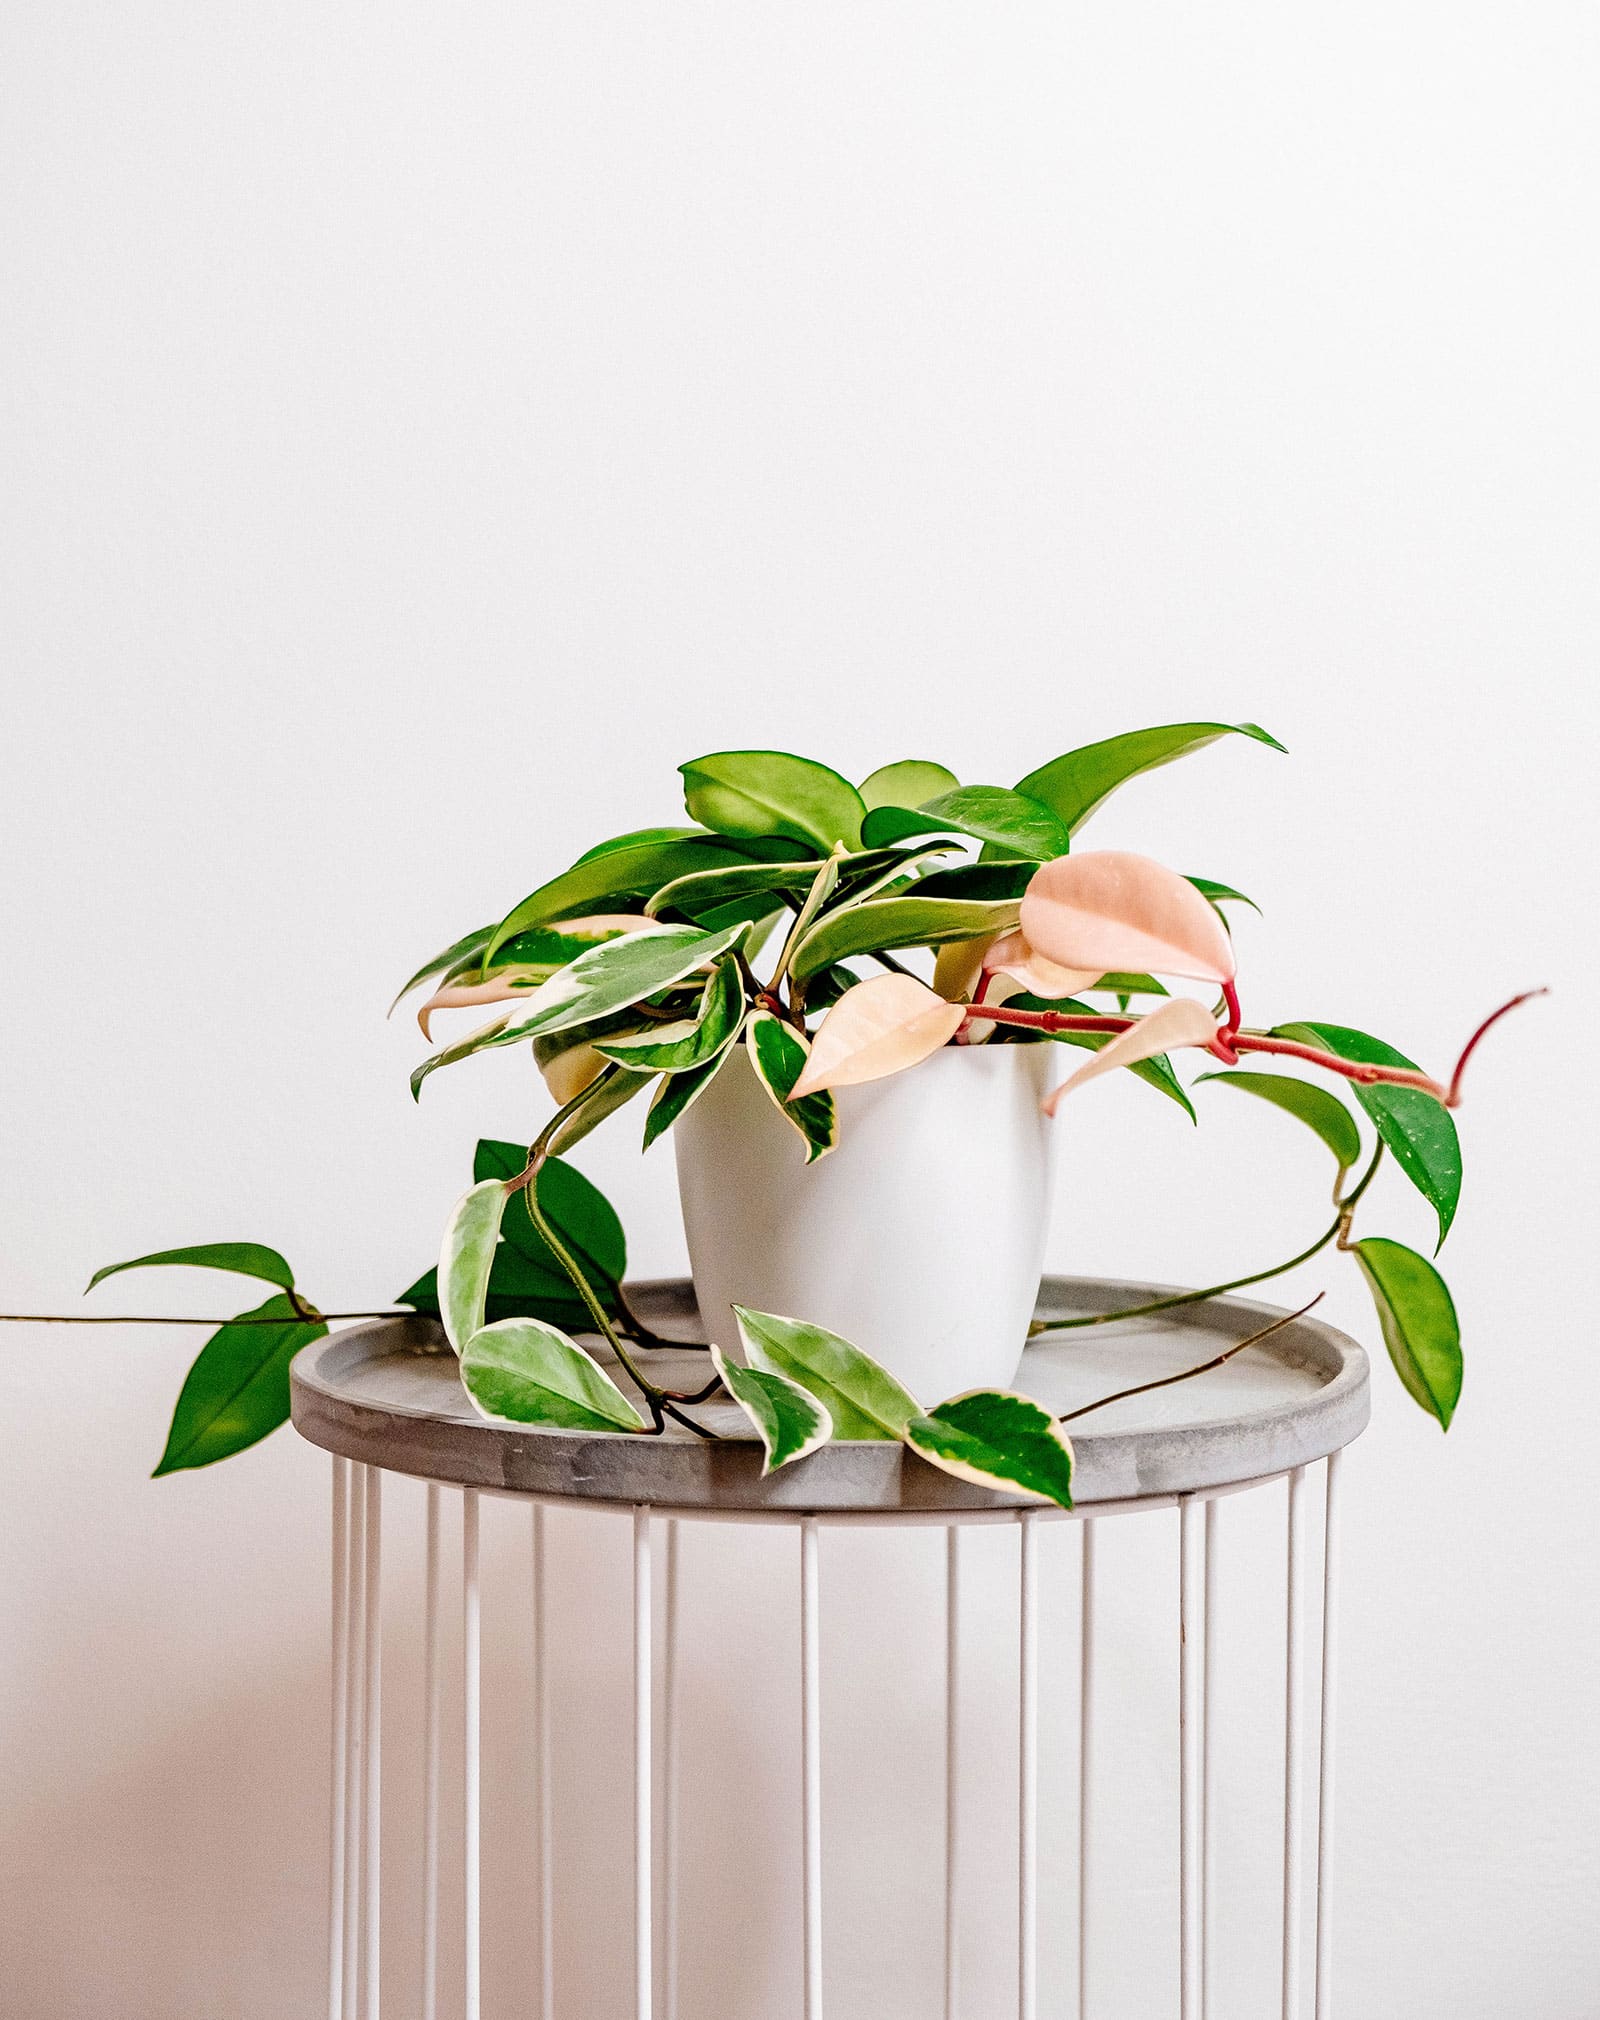 Hoya carnosa 'Krimson Princess' in a white pot on a gray side table